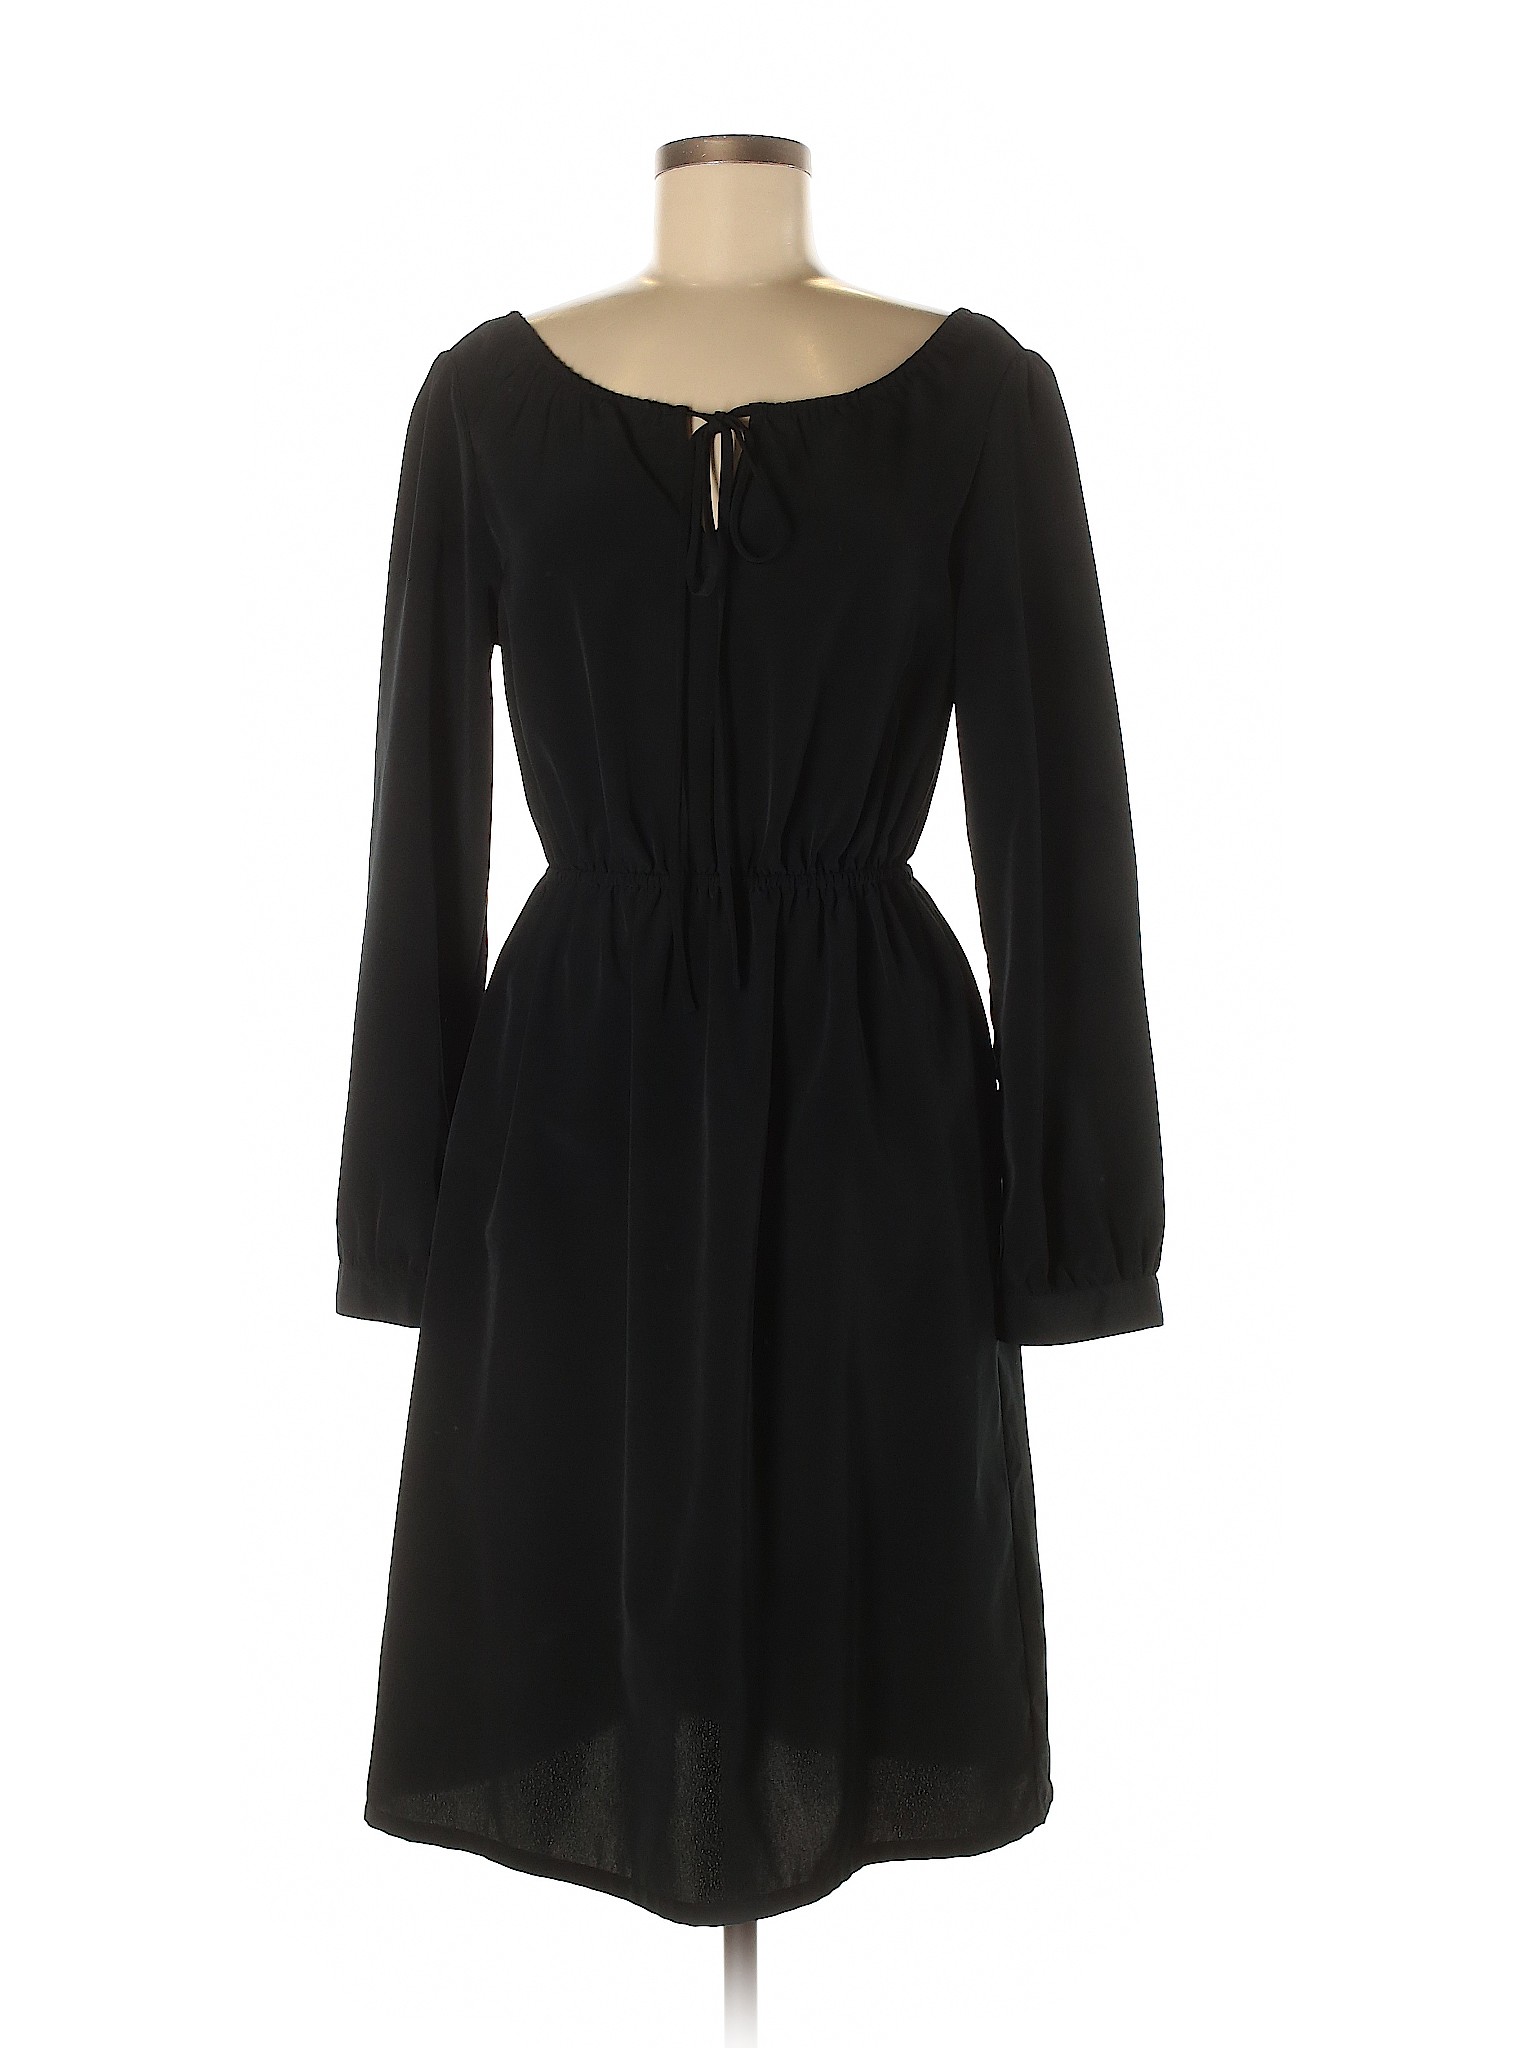 Mossimo Women Black Casual Dress M | eBay